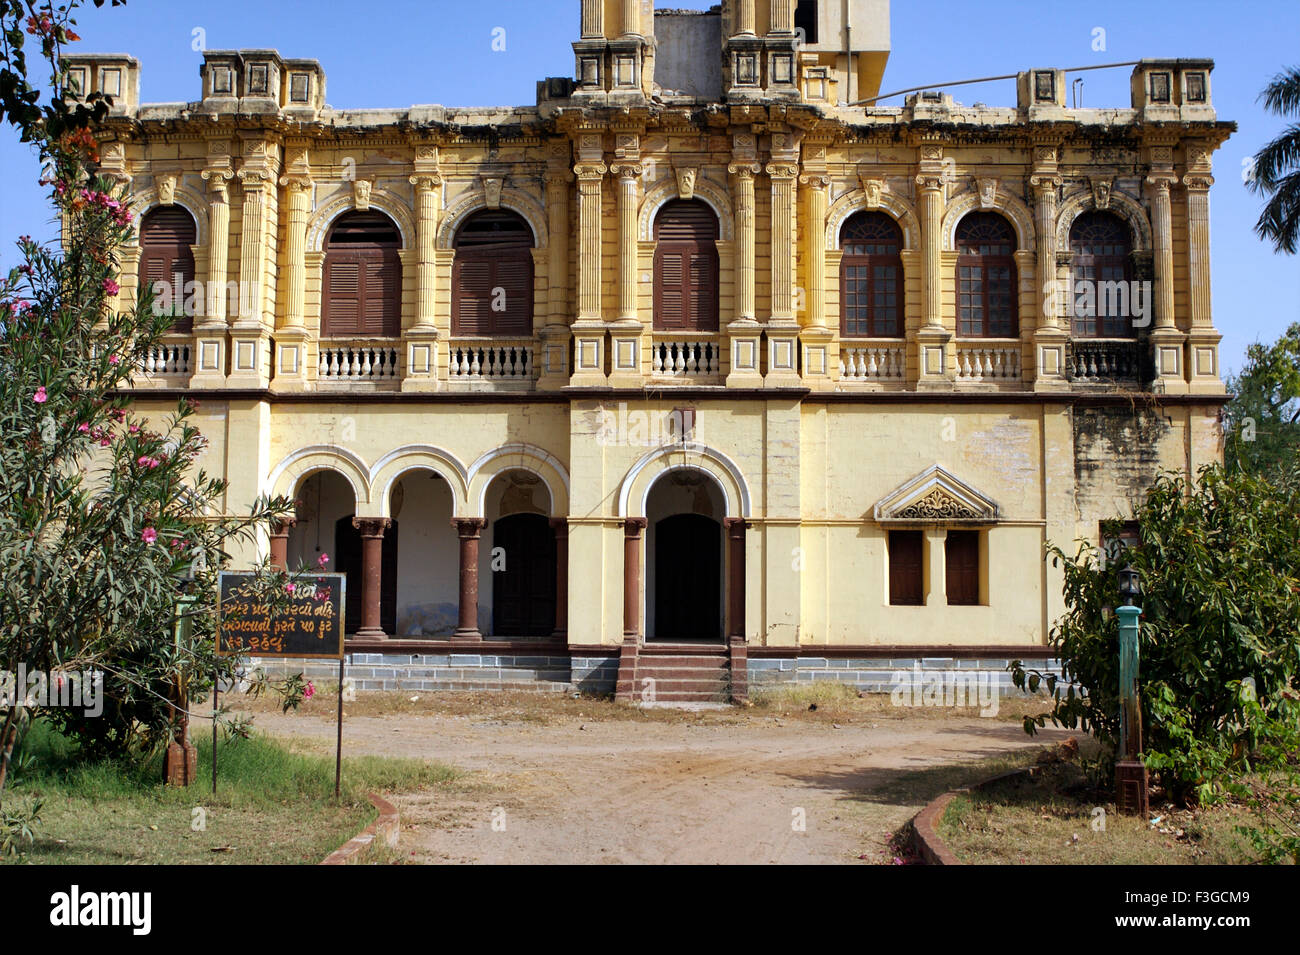 Sharad baug palace rovinato in terra quake 2001 ; ; kutch Gujarat ; India Foto Stock